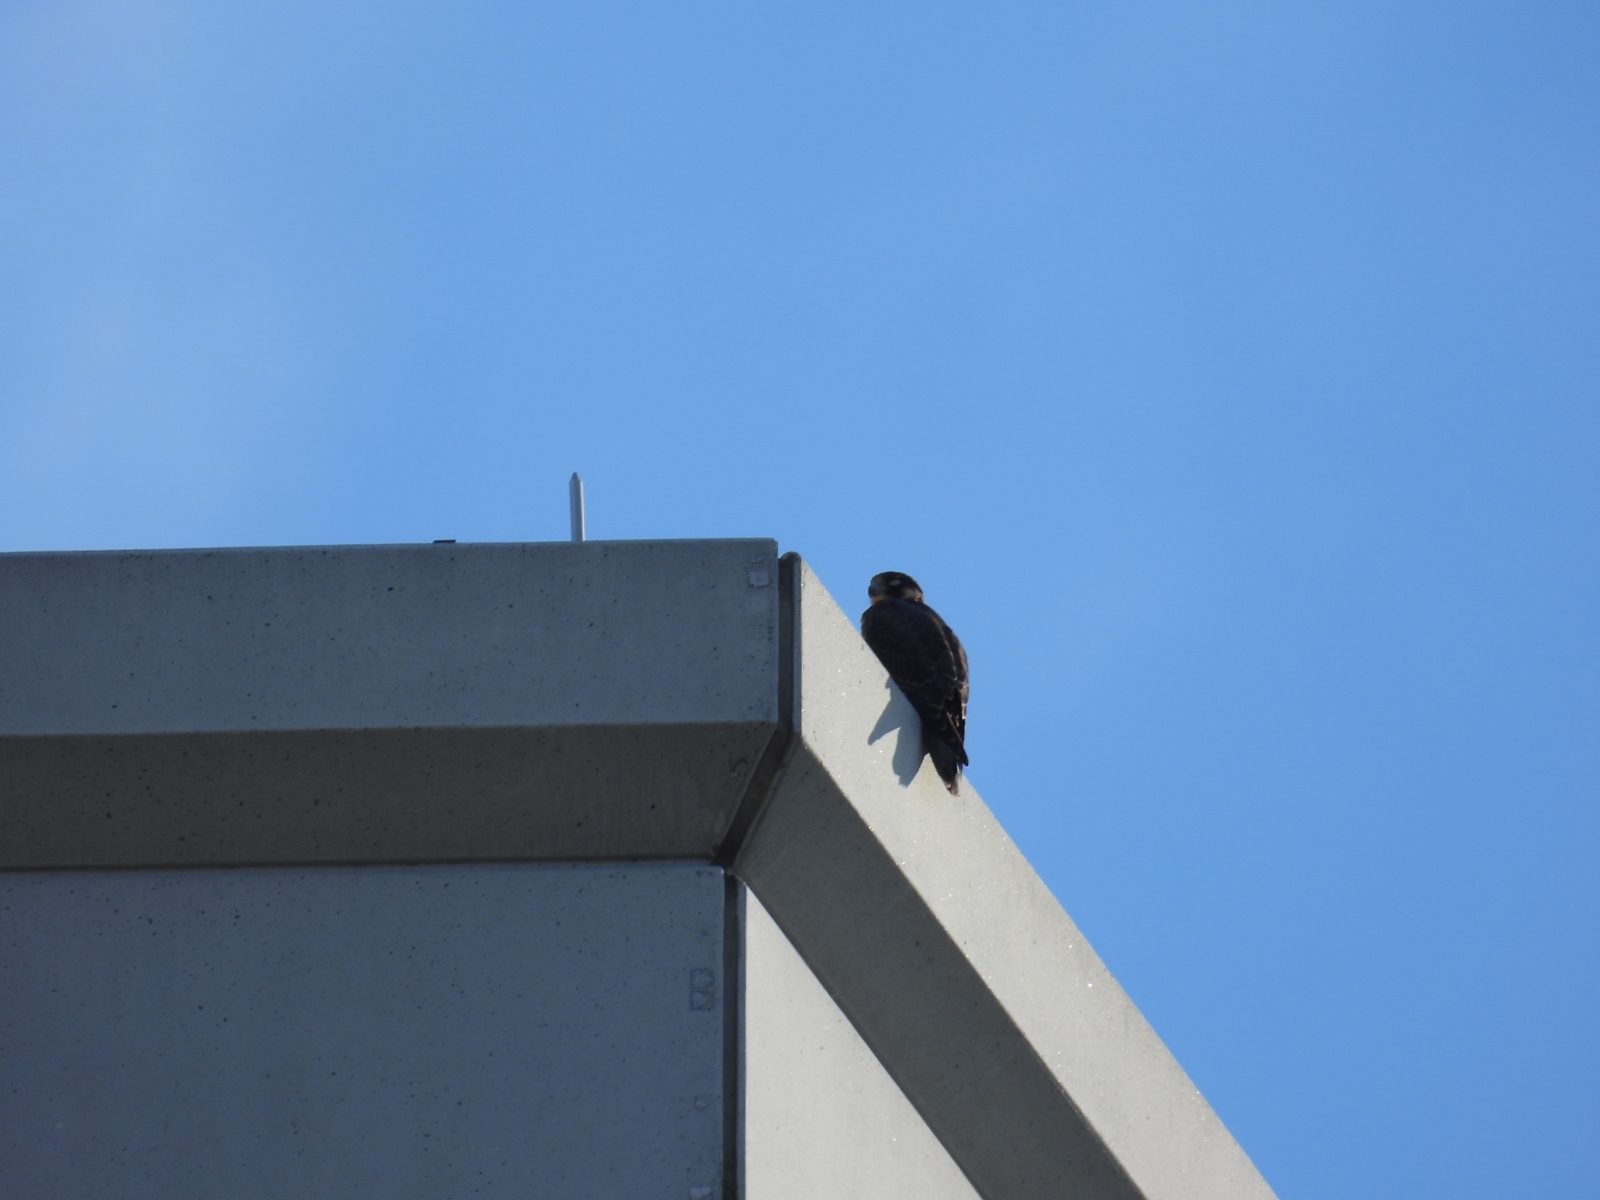 Juvenile male (blue) perched atop the Williams Mullen building